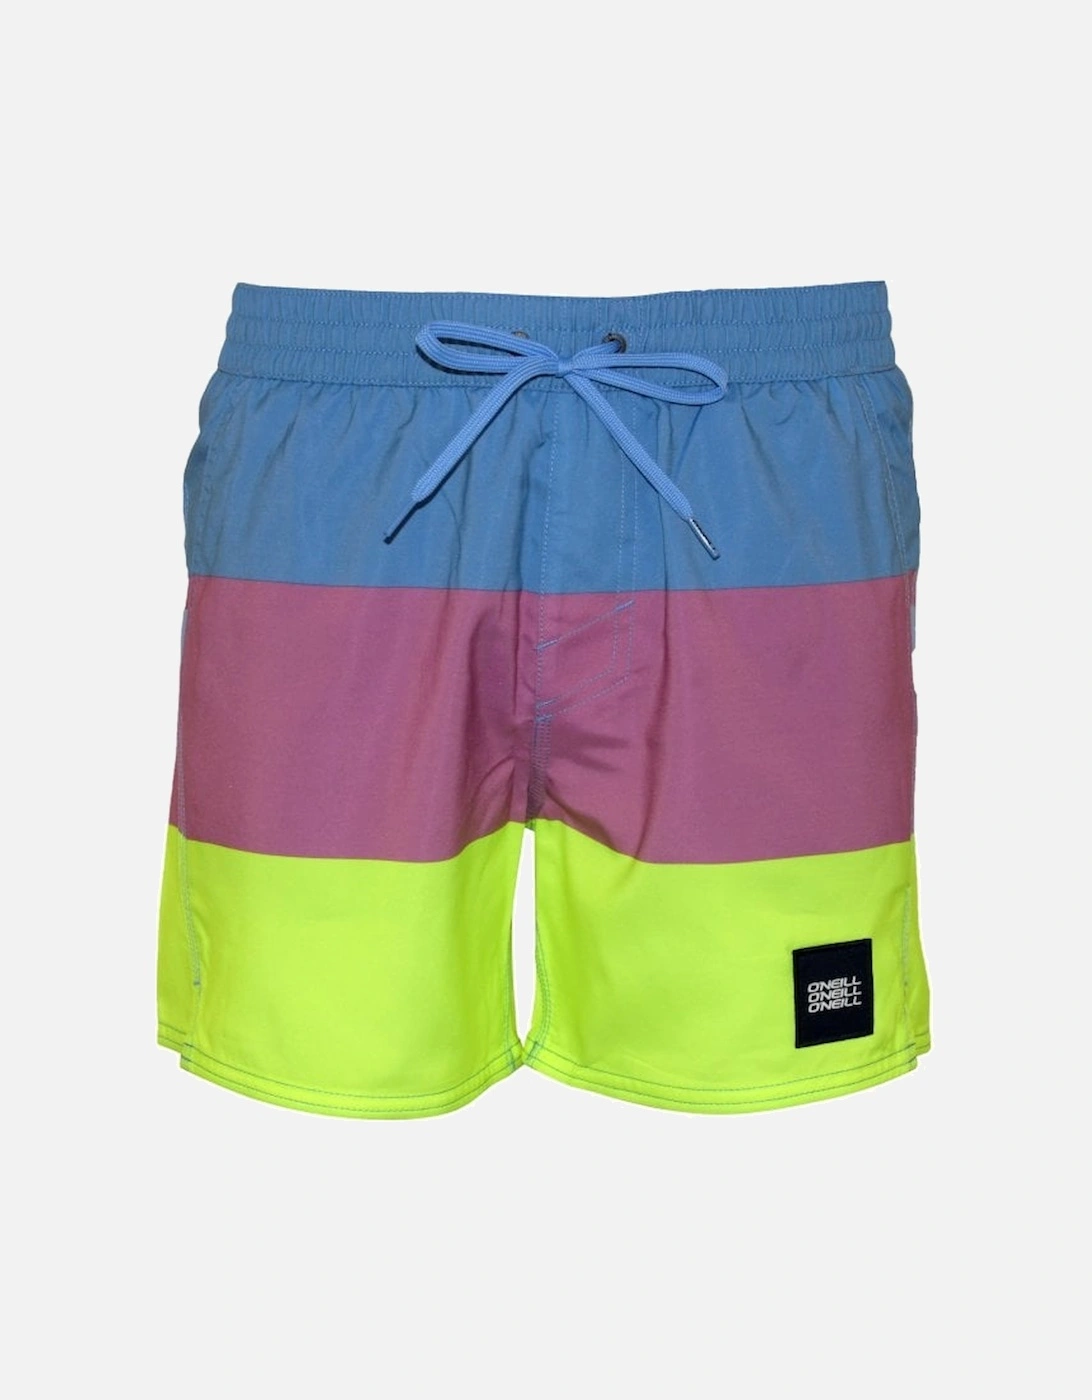 Vert Horizon Block Stripes Swim Shorts, Blue/pink, 7 of 6